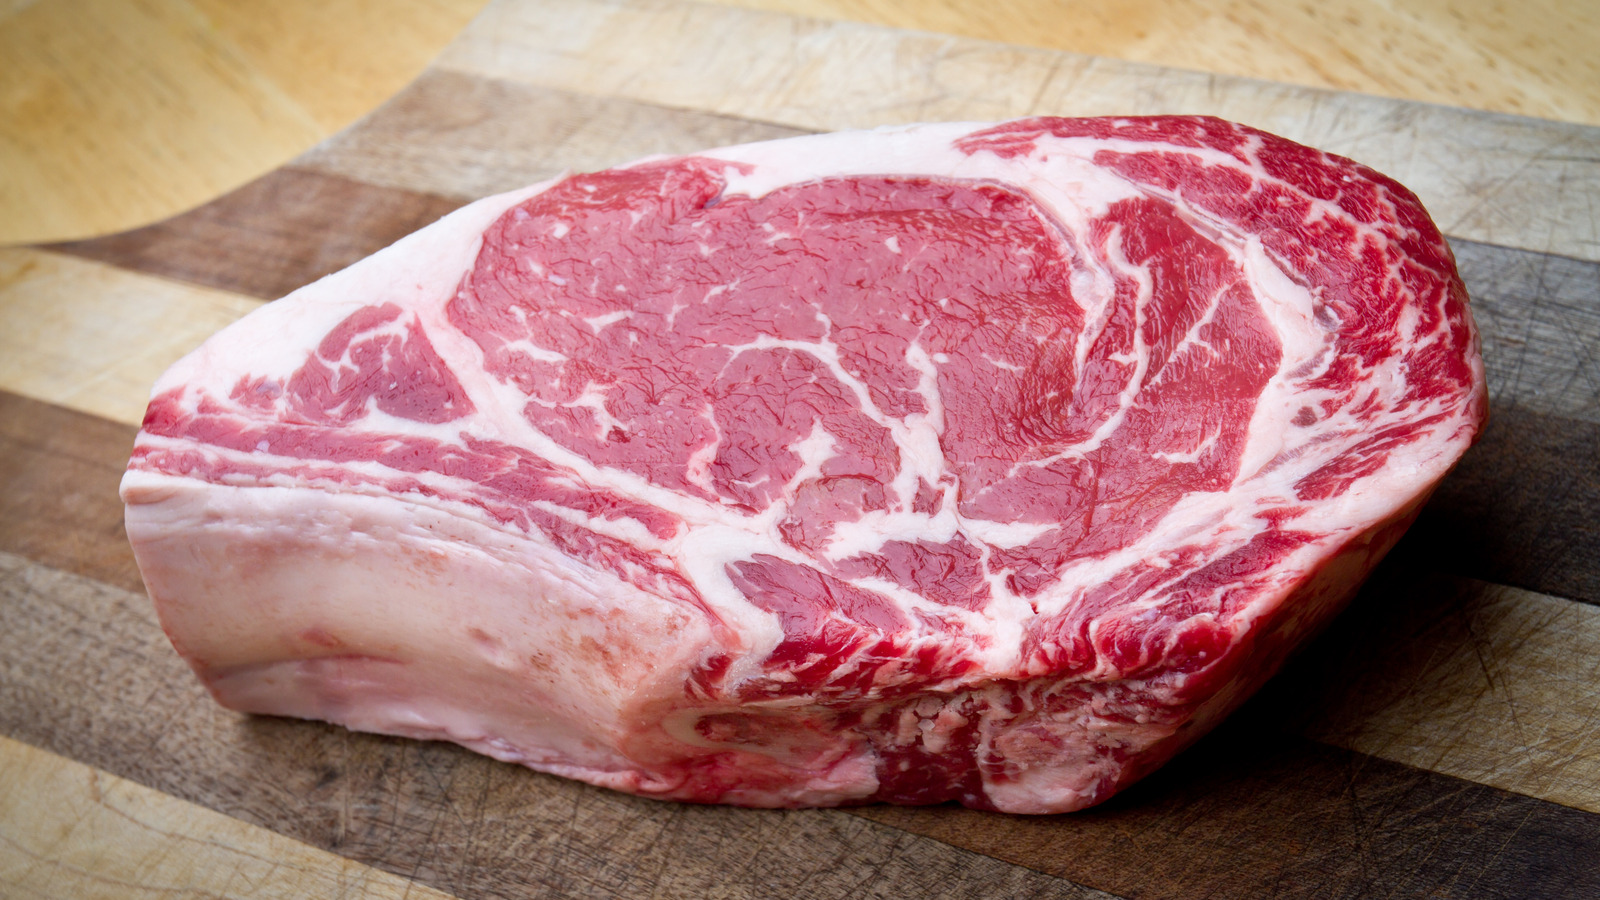 The tender difference between New York strip steak and rib eye steak